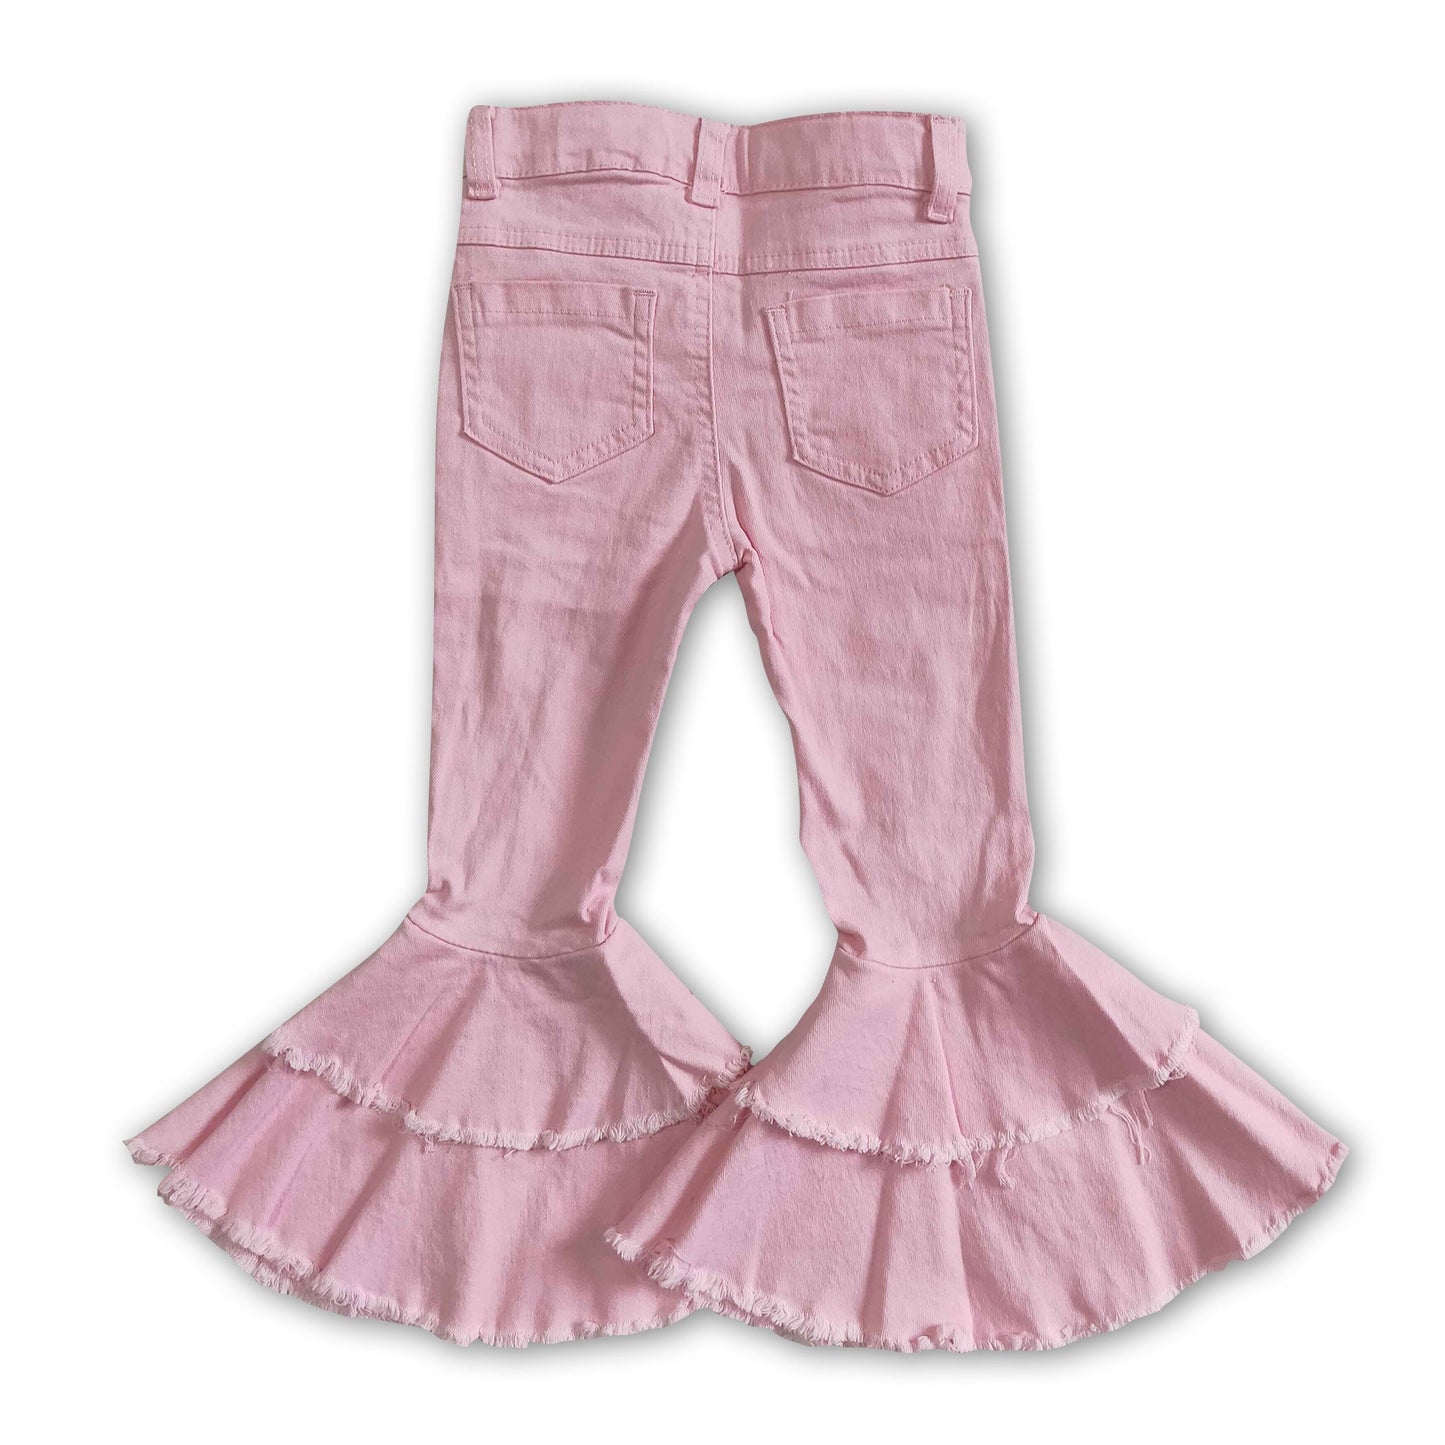 Pink denim pants distressed baby girls jeans match belt